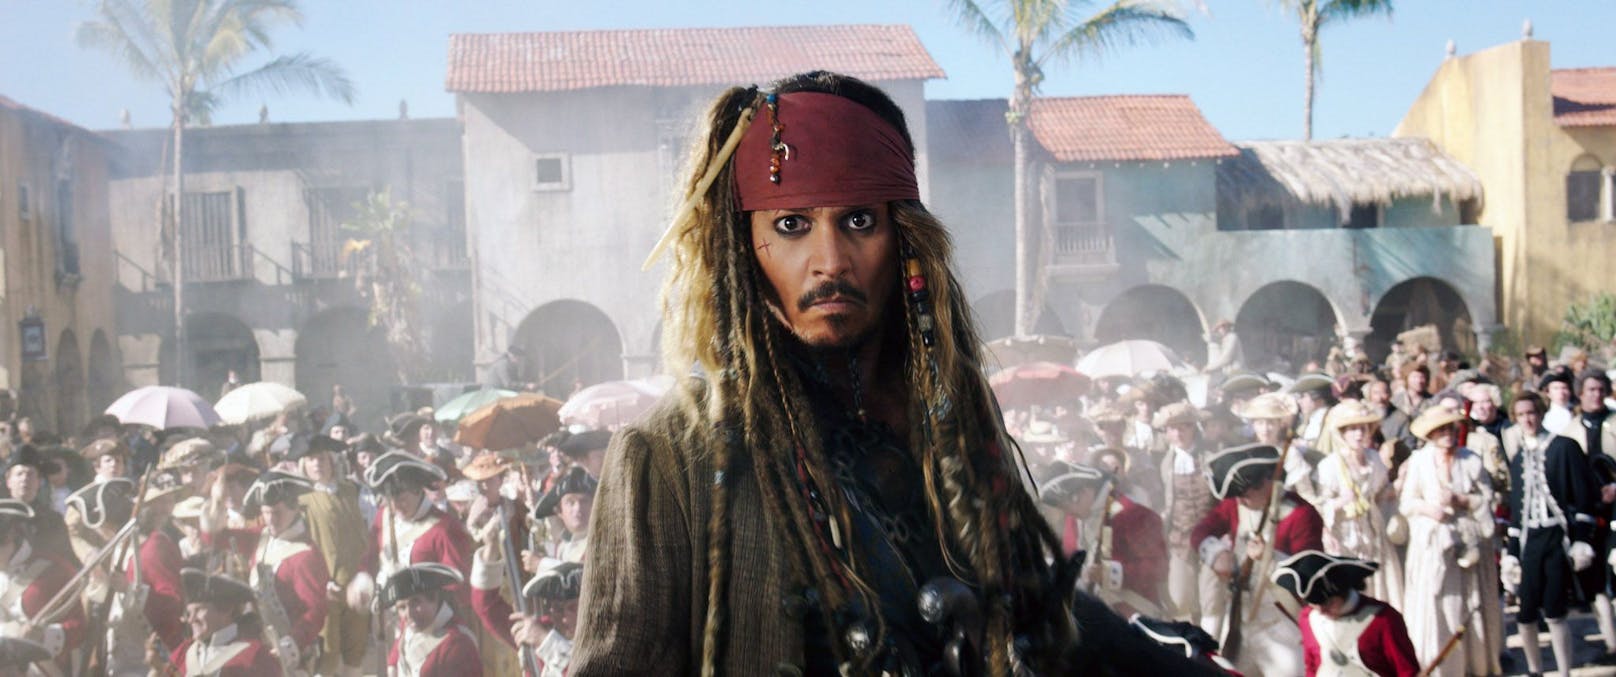 Johnny Depp bald wieder als Jack Sparrow im Kino?